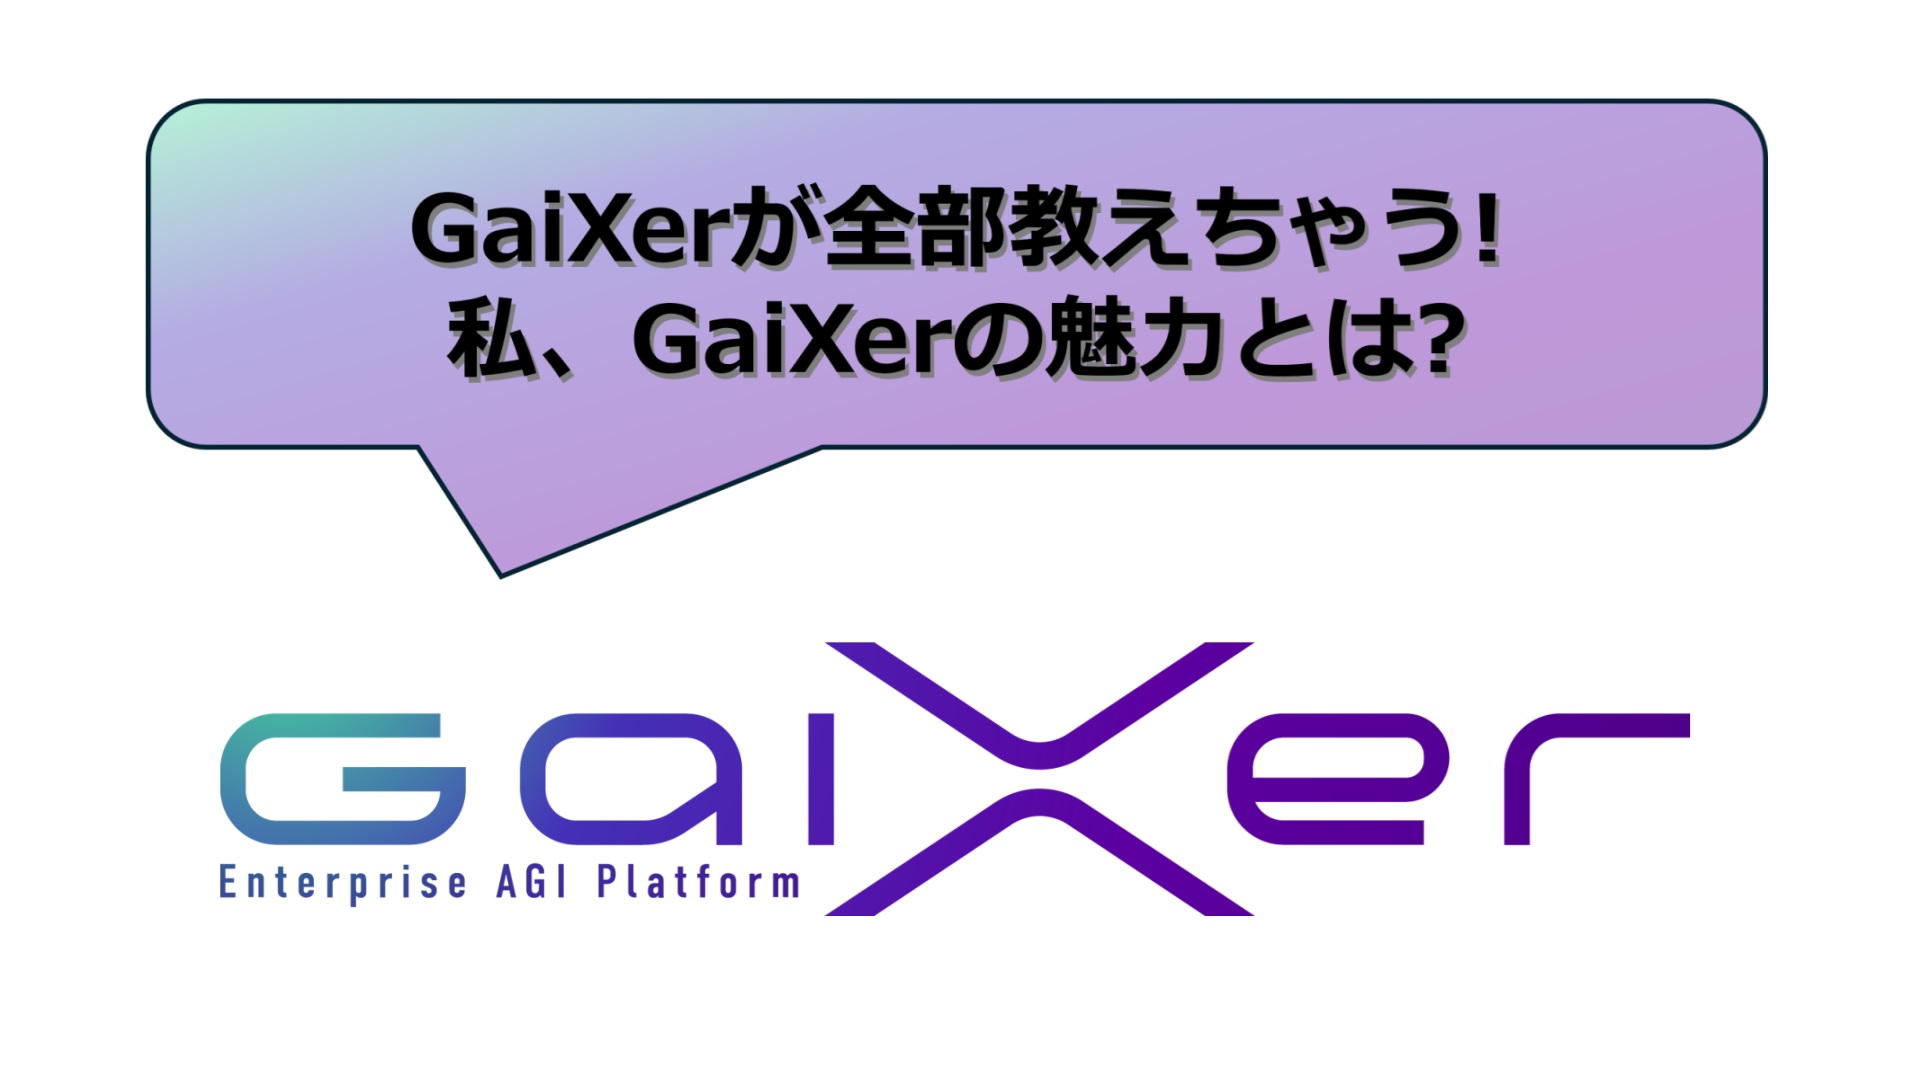 GaiXerが全部教えちゃう!私、GaiXerの魅力とは?